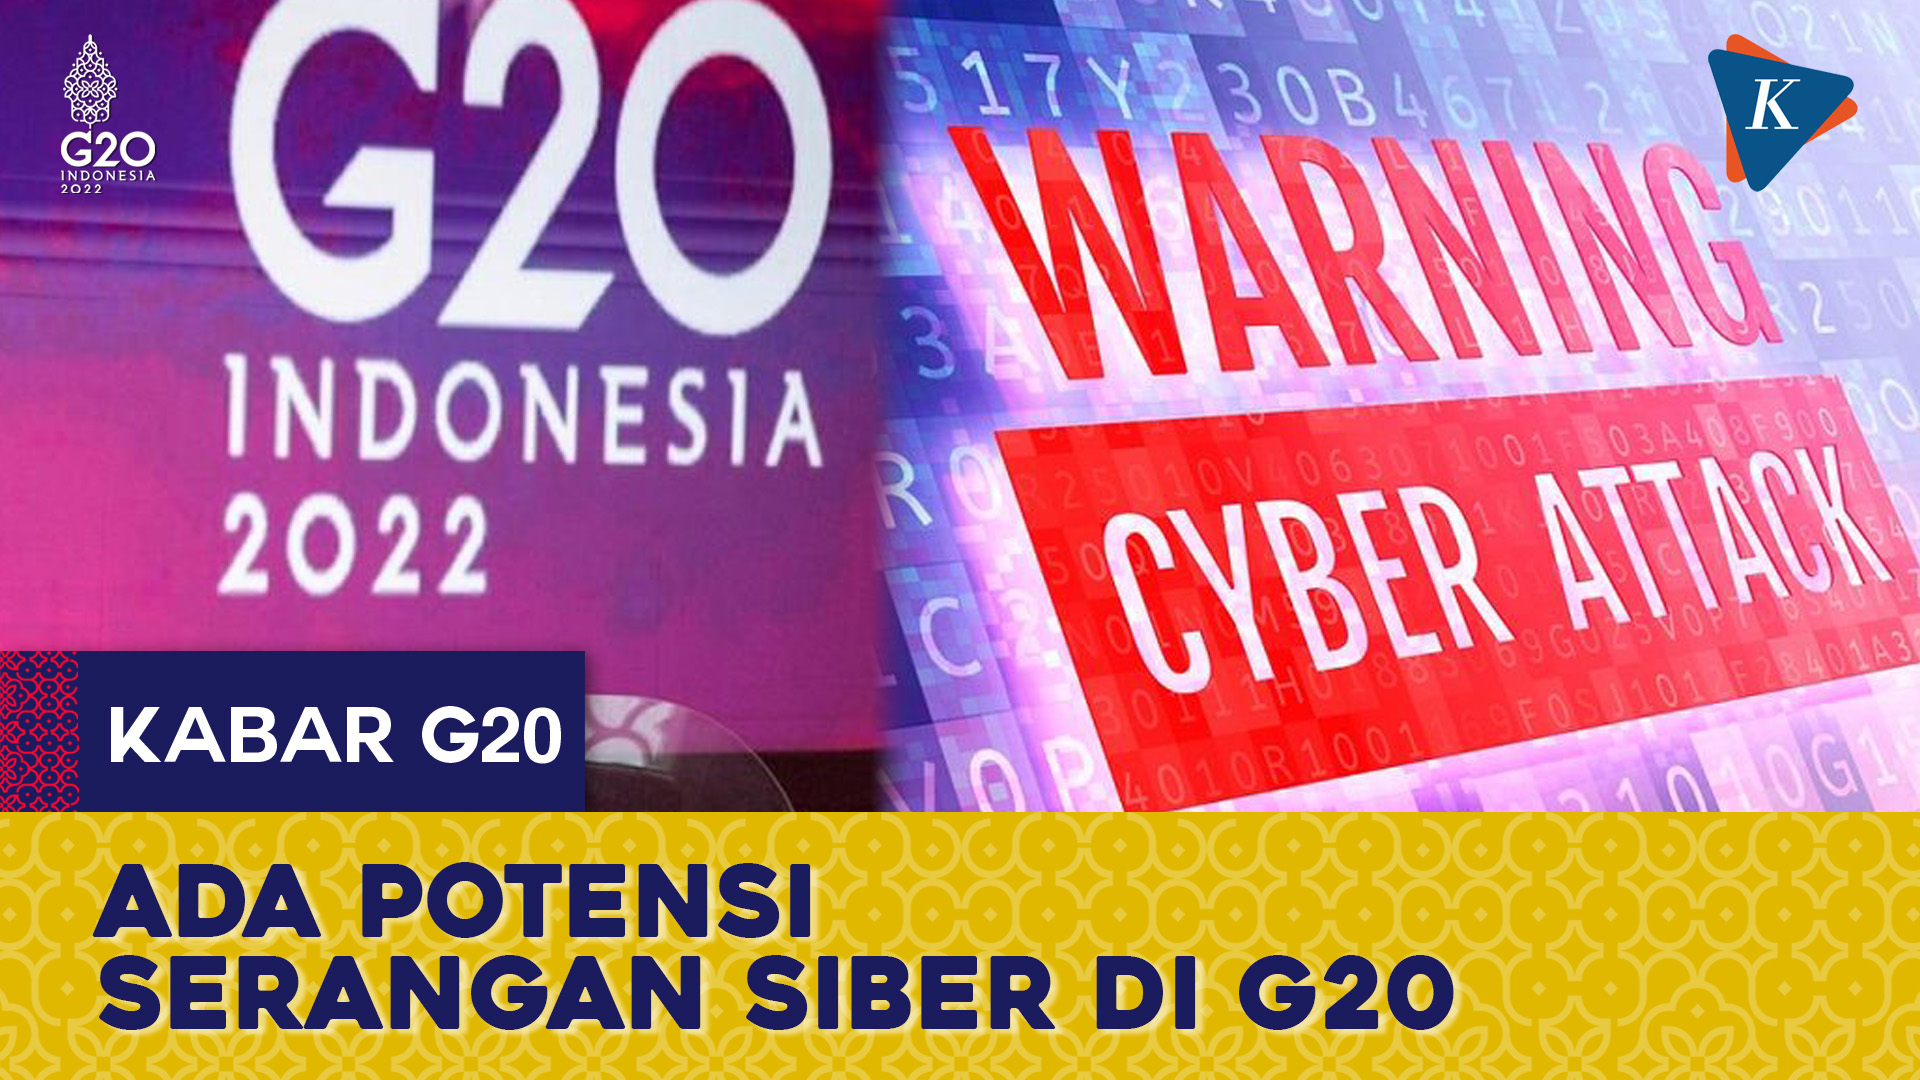 Panglima TNI Akui Ada Potensi Serangan Siber di G20, Luhut Minta Publik Tak Khawatir